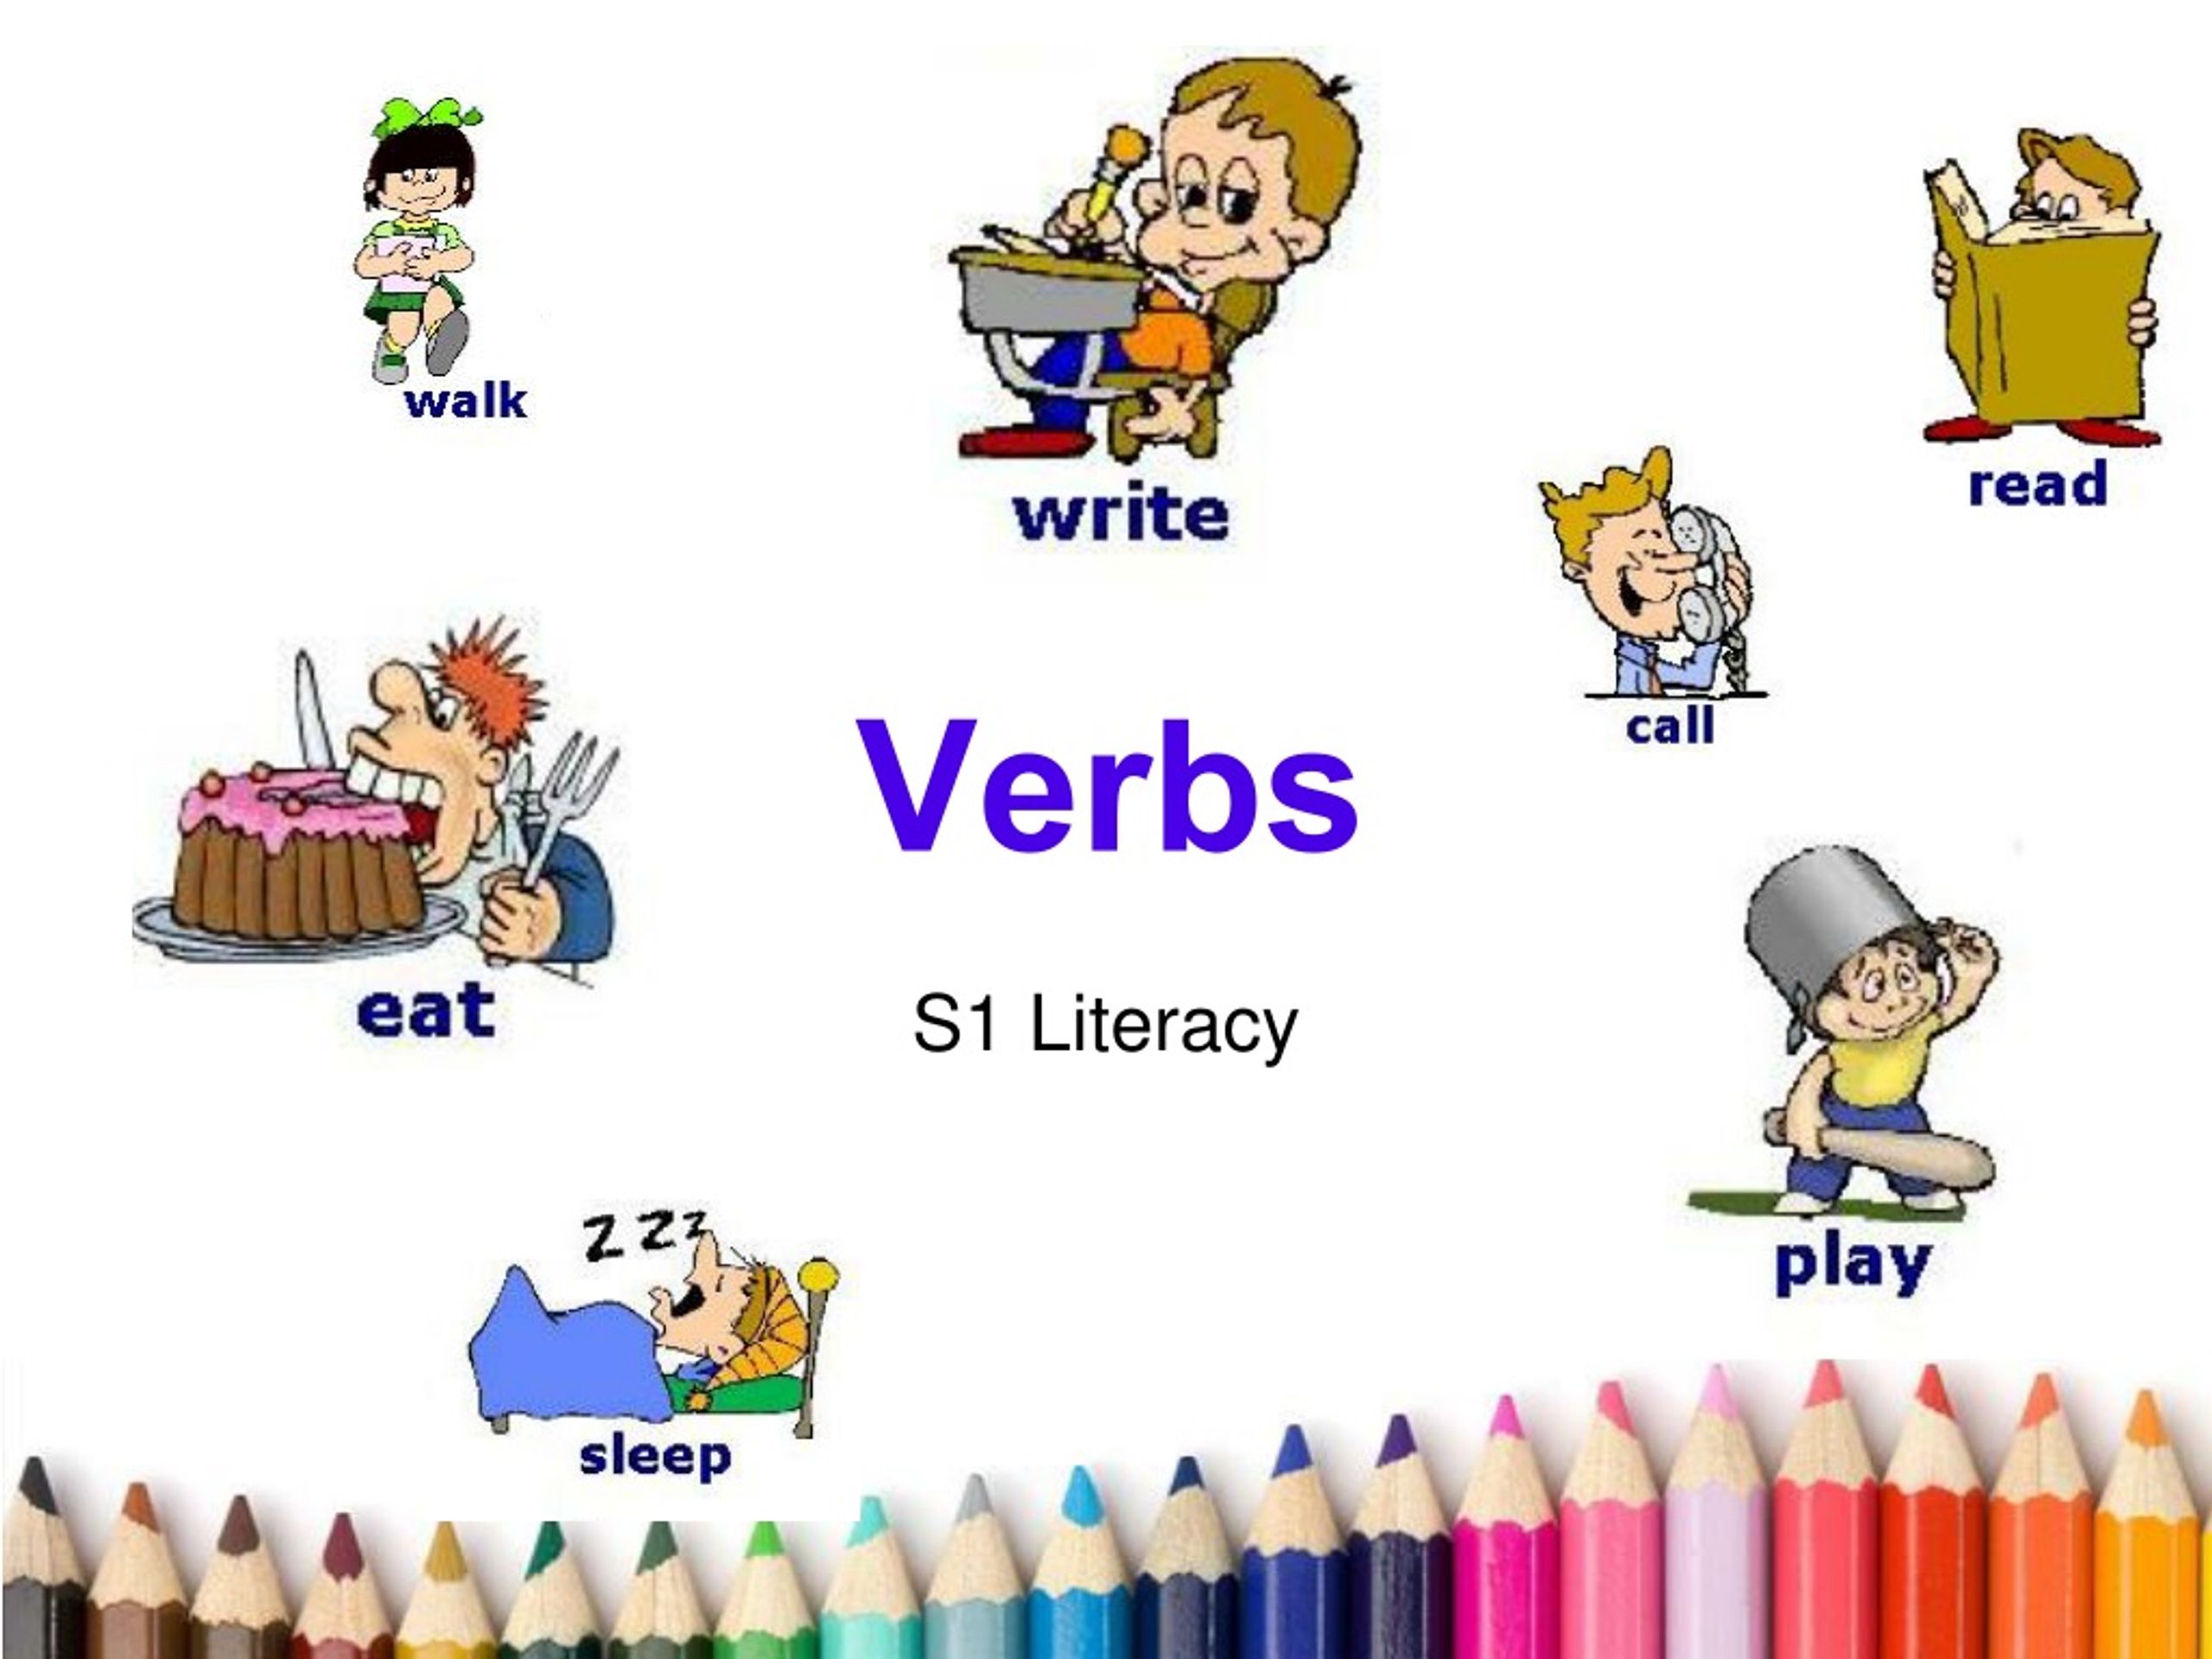 verbs ppt presentation free download